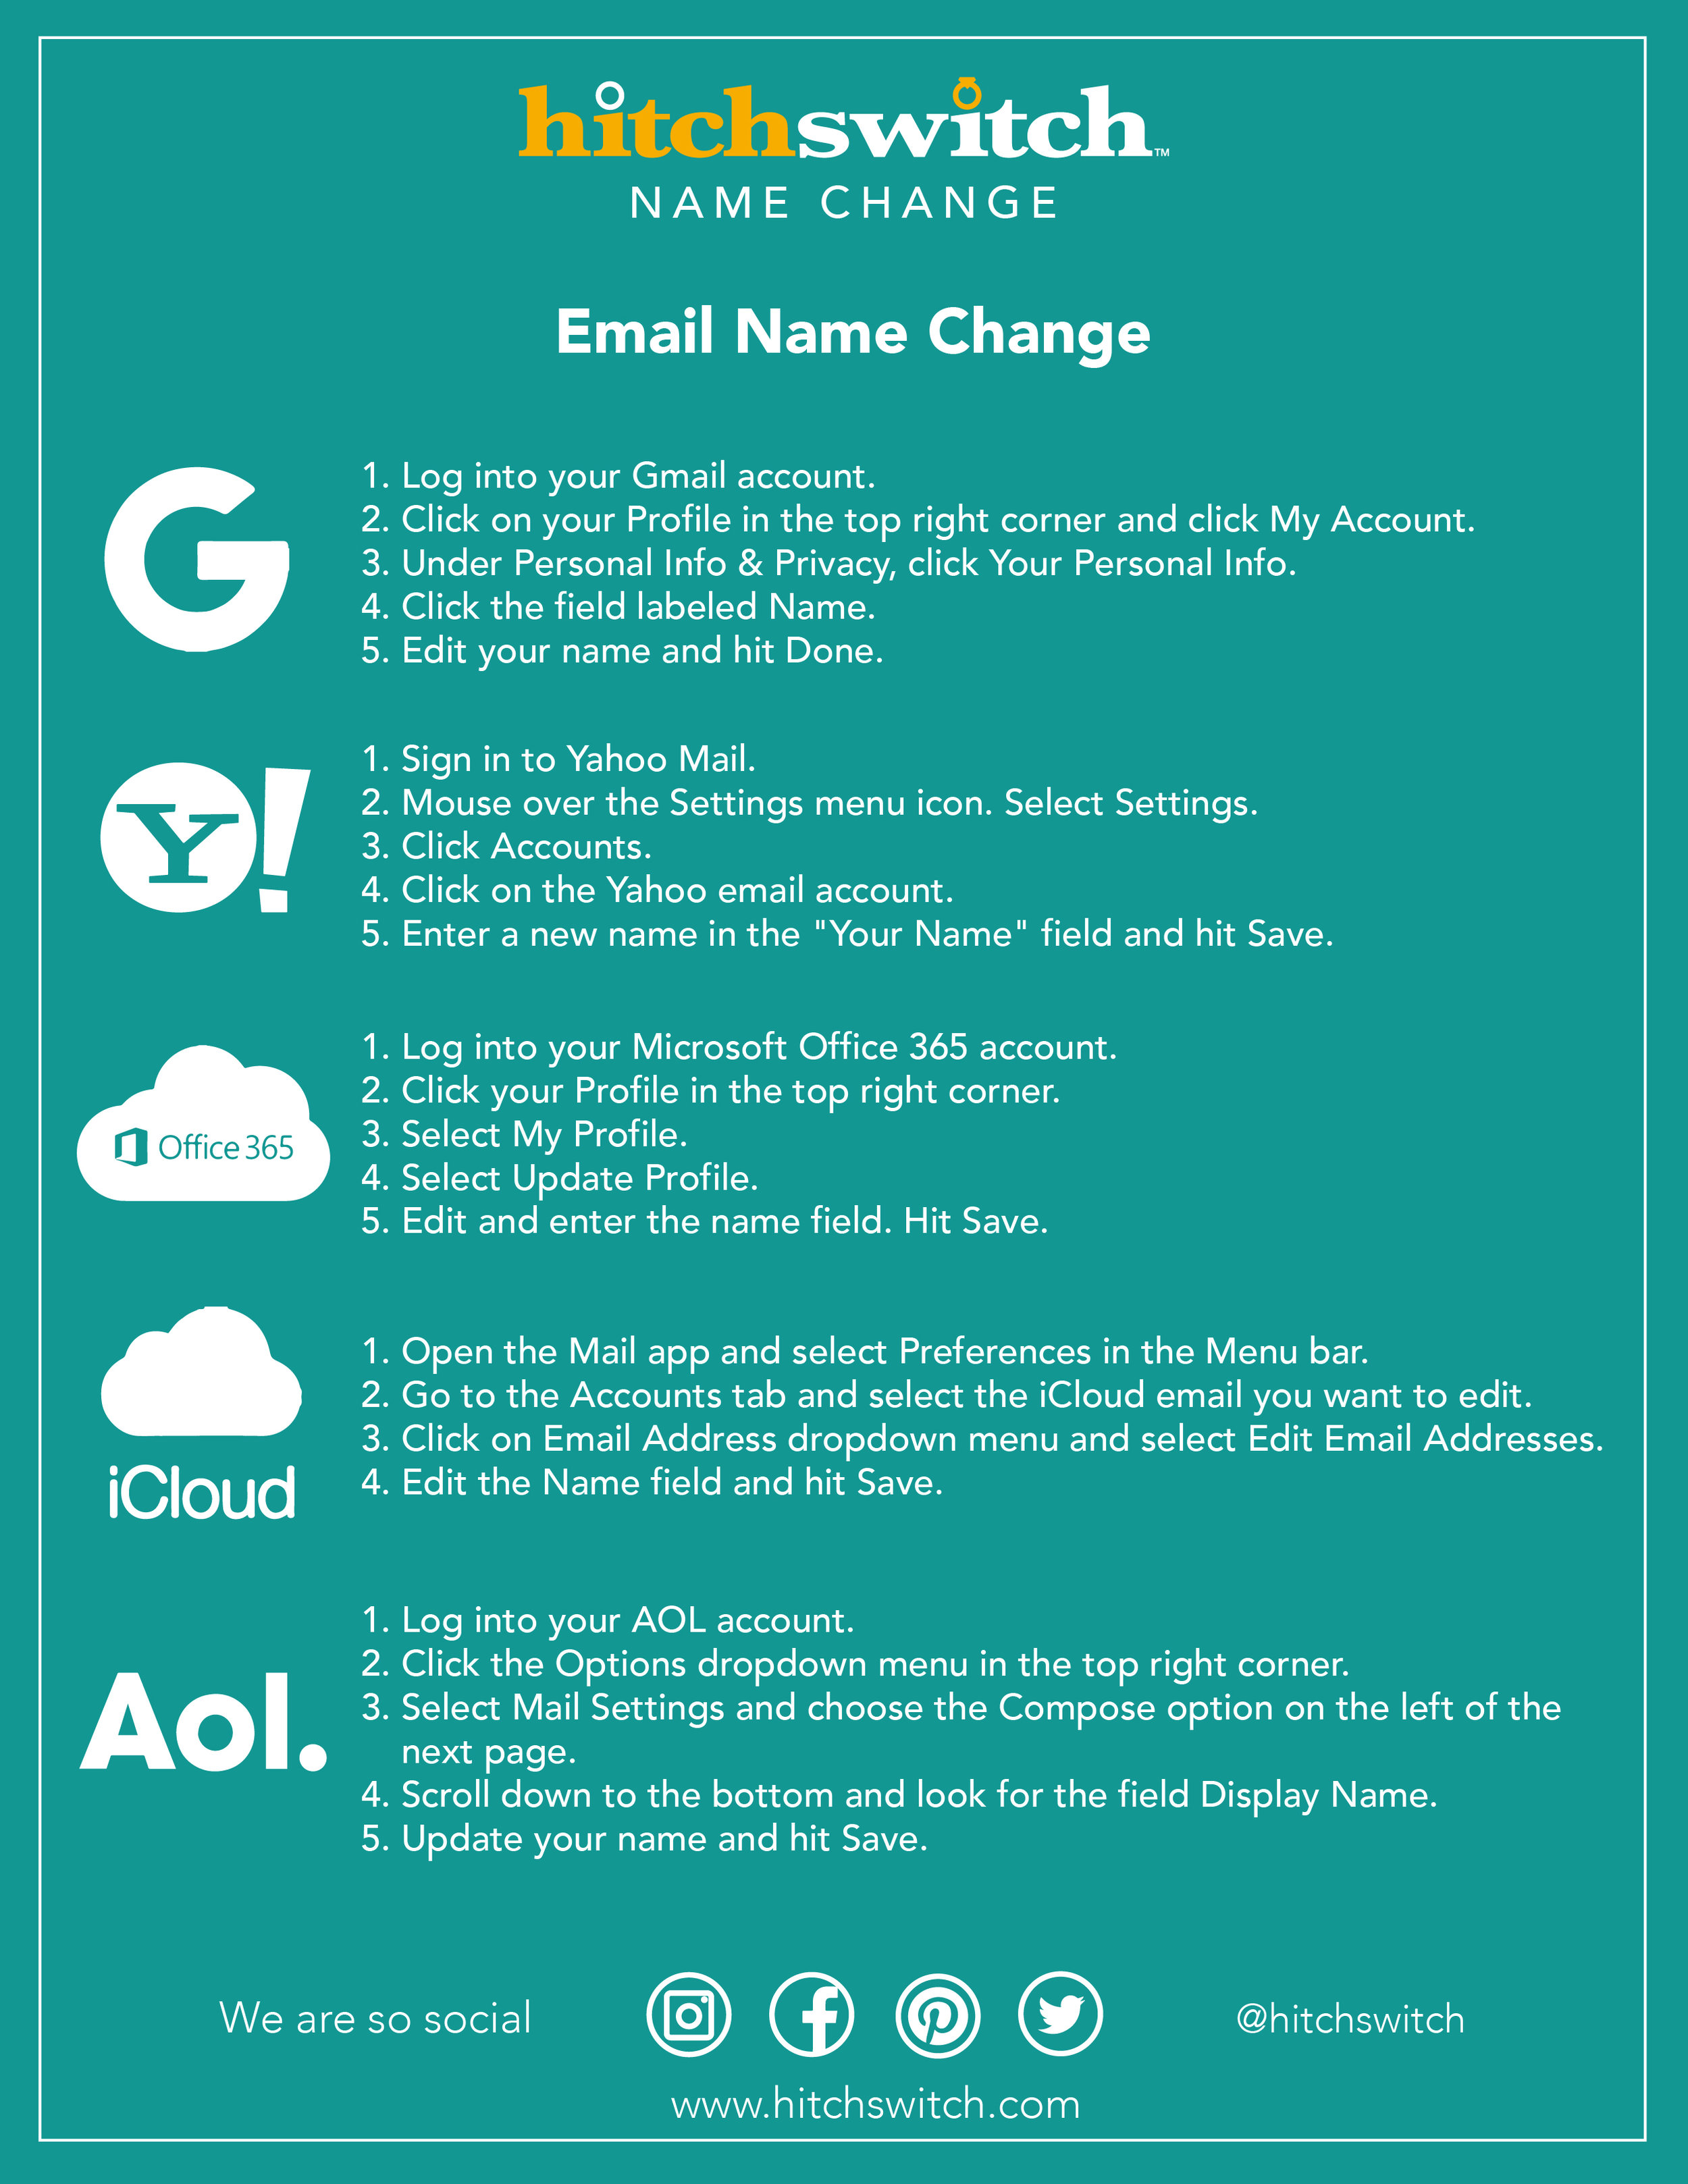 Email Name Change.jpg